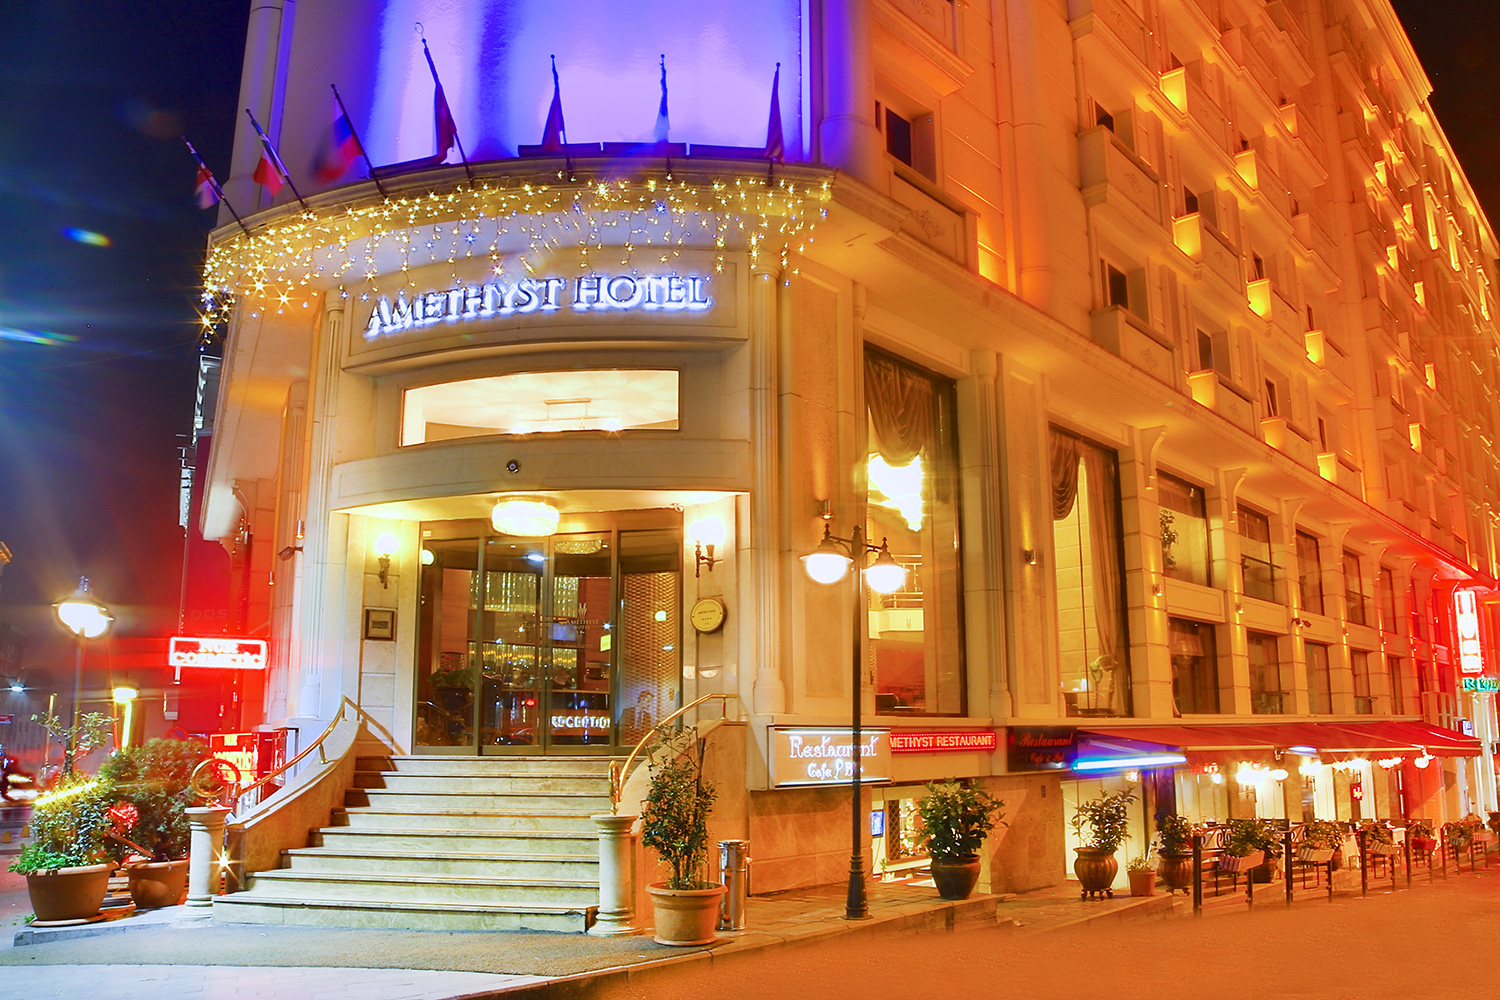 Отель аметист. Amethyst Hotel Стамбул. Лалели Стамбул гостиницы. Гостиница Amethyst Hotel Laleli Istanbul.